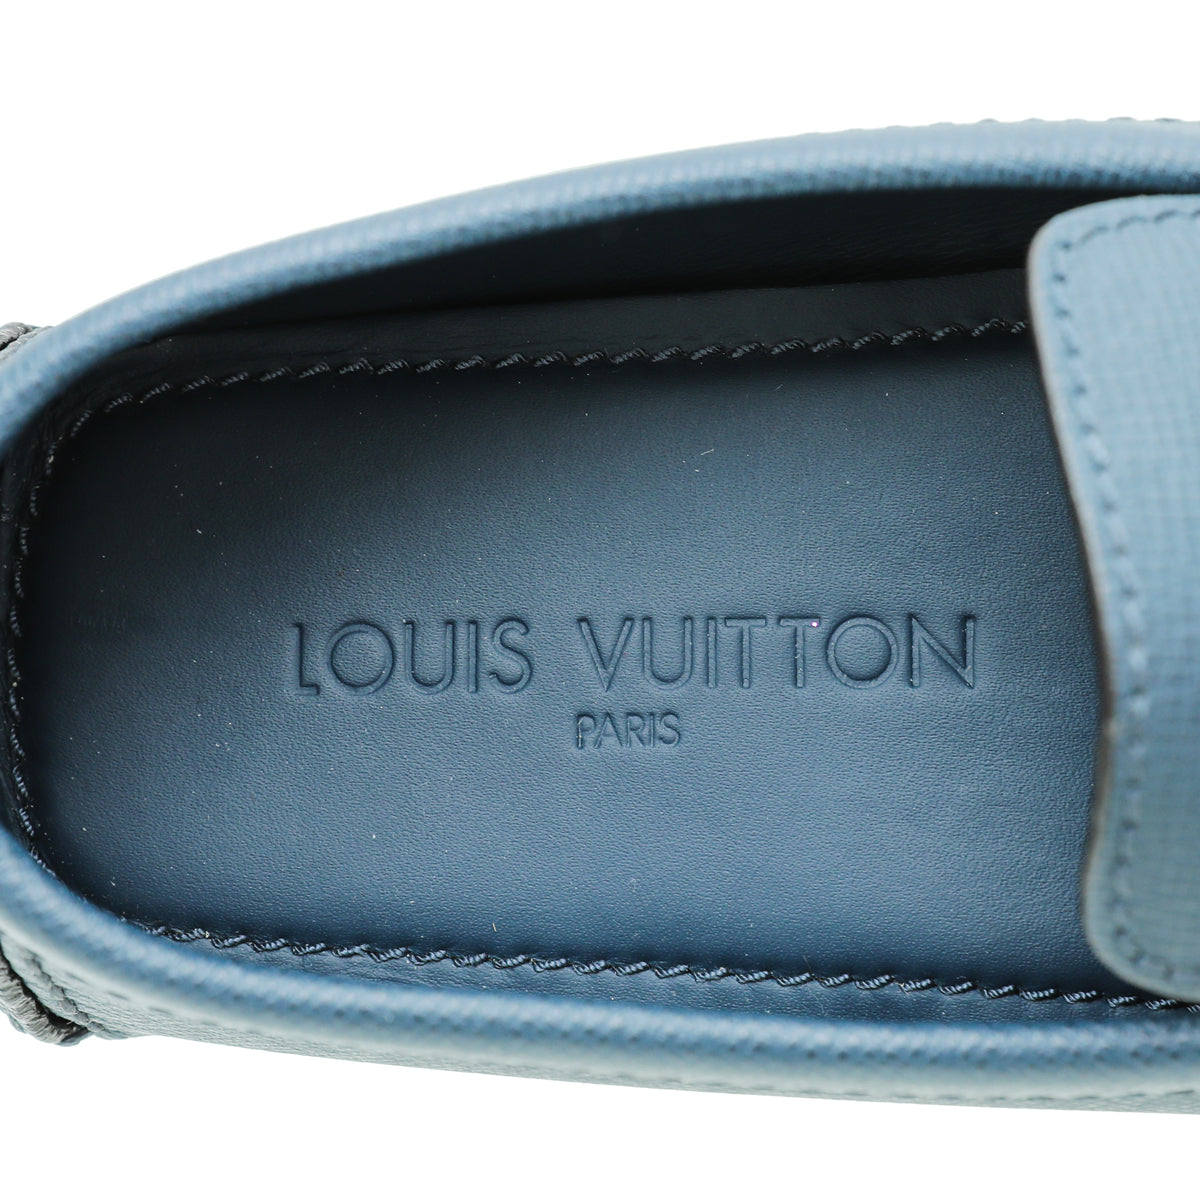 Louis Vuitton Web Monte Carlo moccasin grain 7 LV